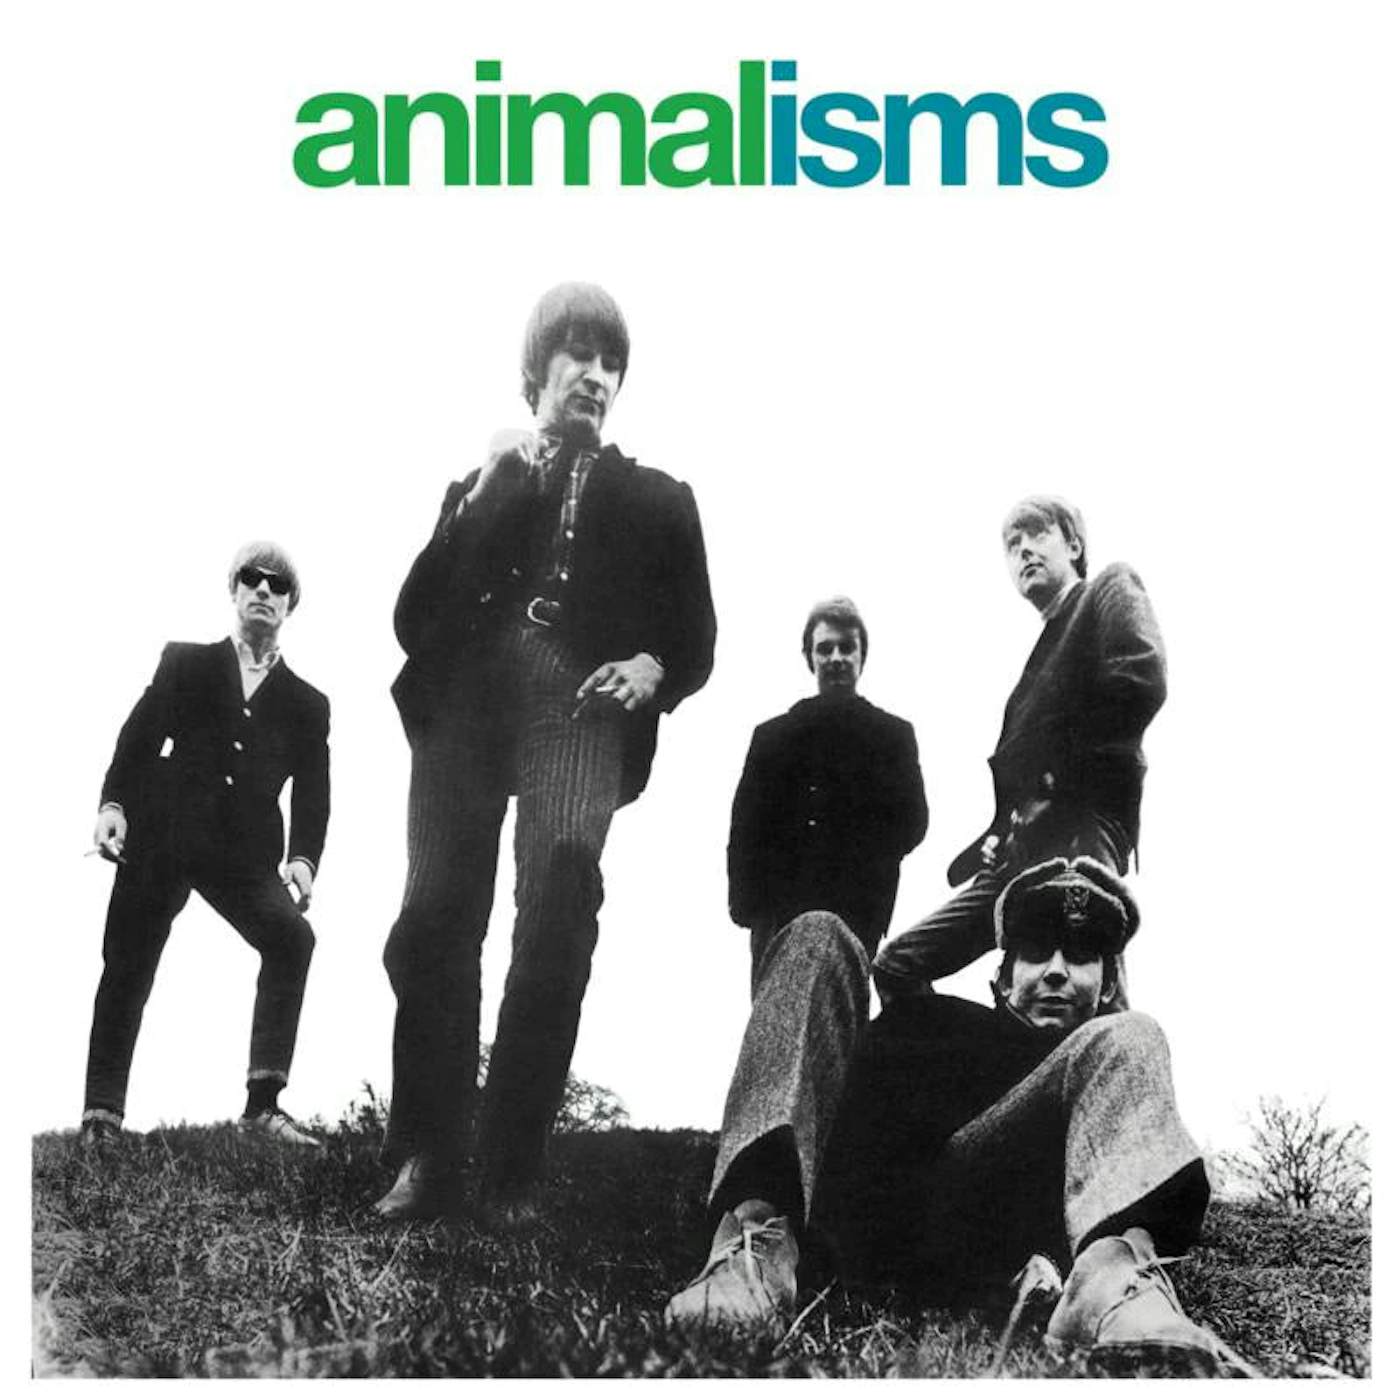 The Animals LP - Animalisms (Vinyl)